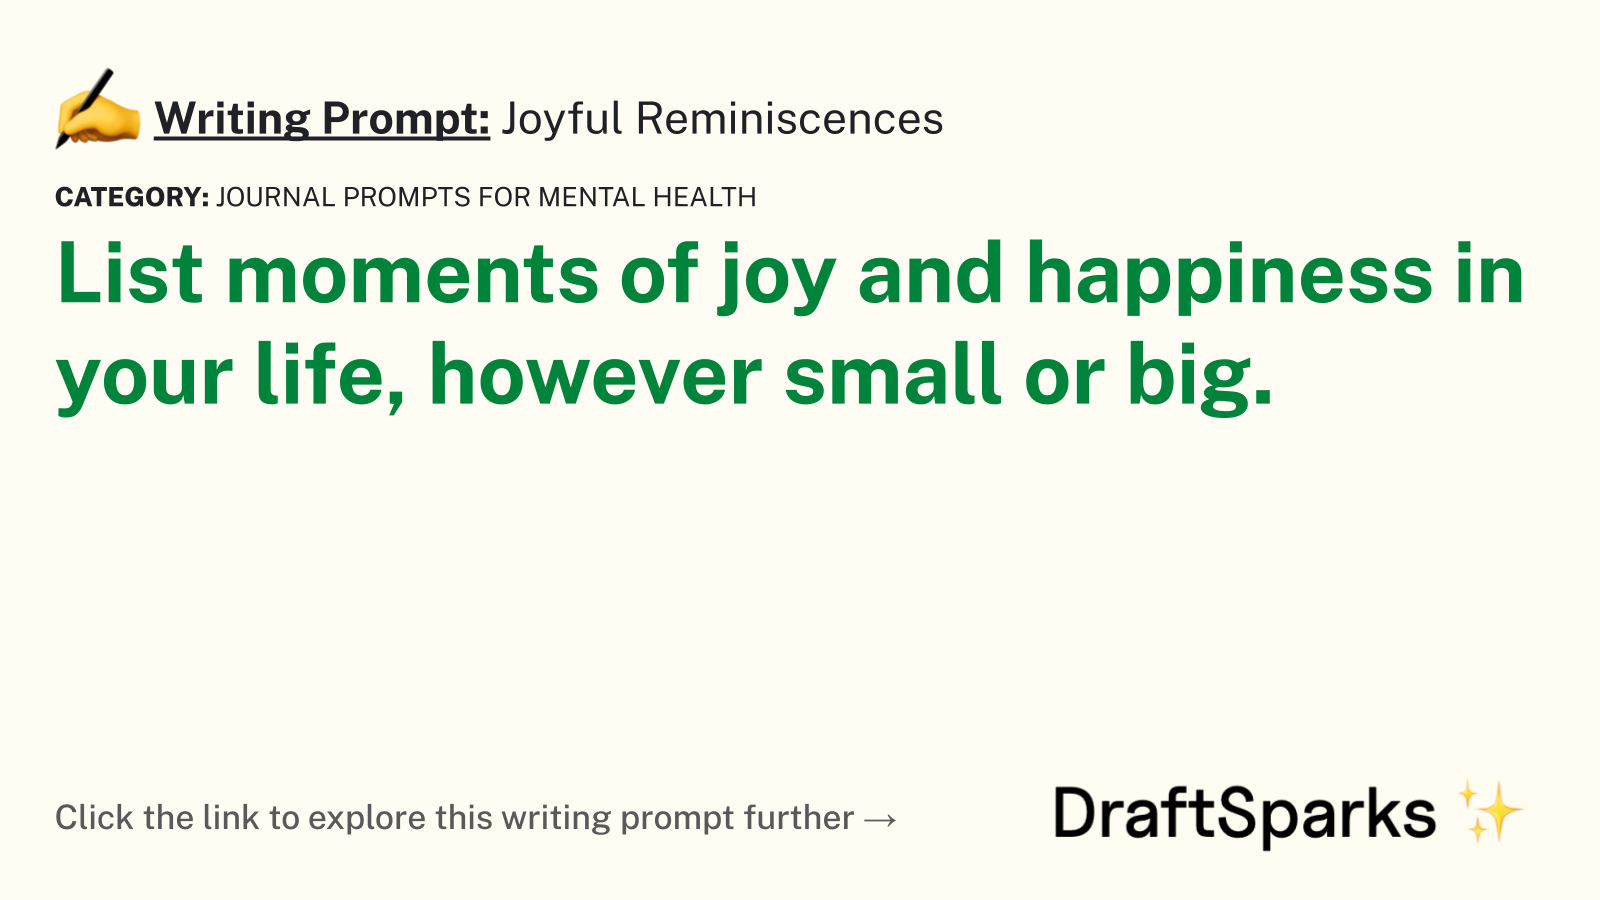 Joyful Reminiscences